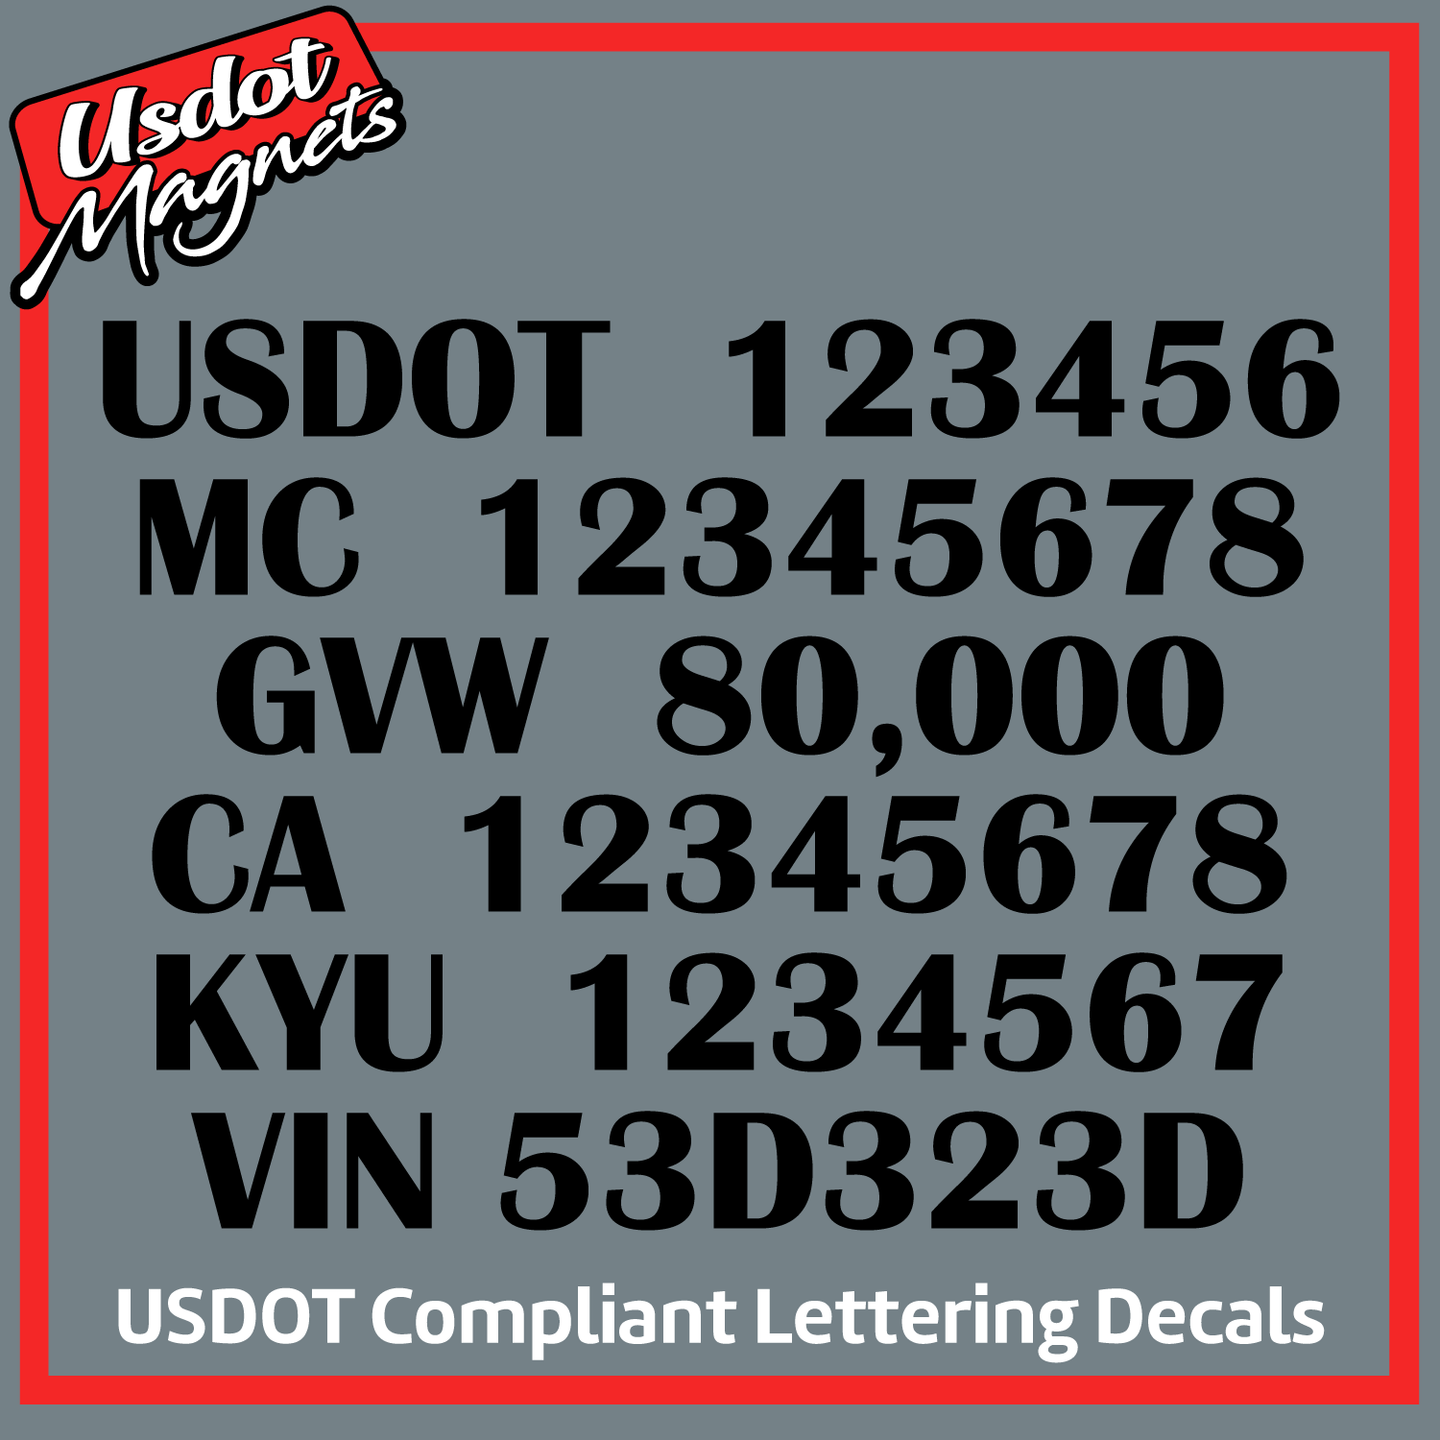 USDOT, MC, GVW, CA, KYU & VIN Number Sticker Decal Lettering (Set of 2)